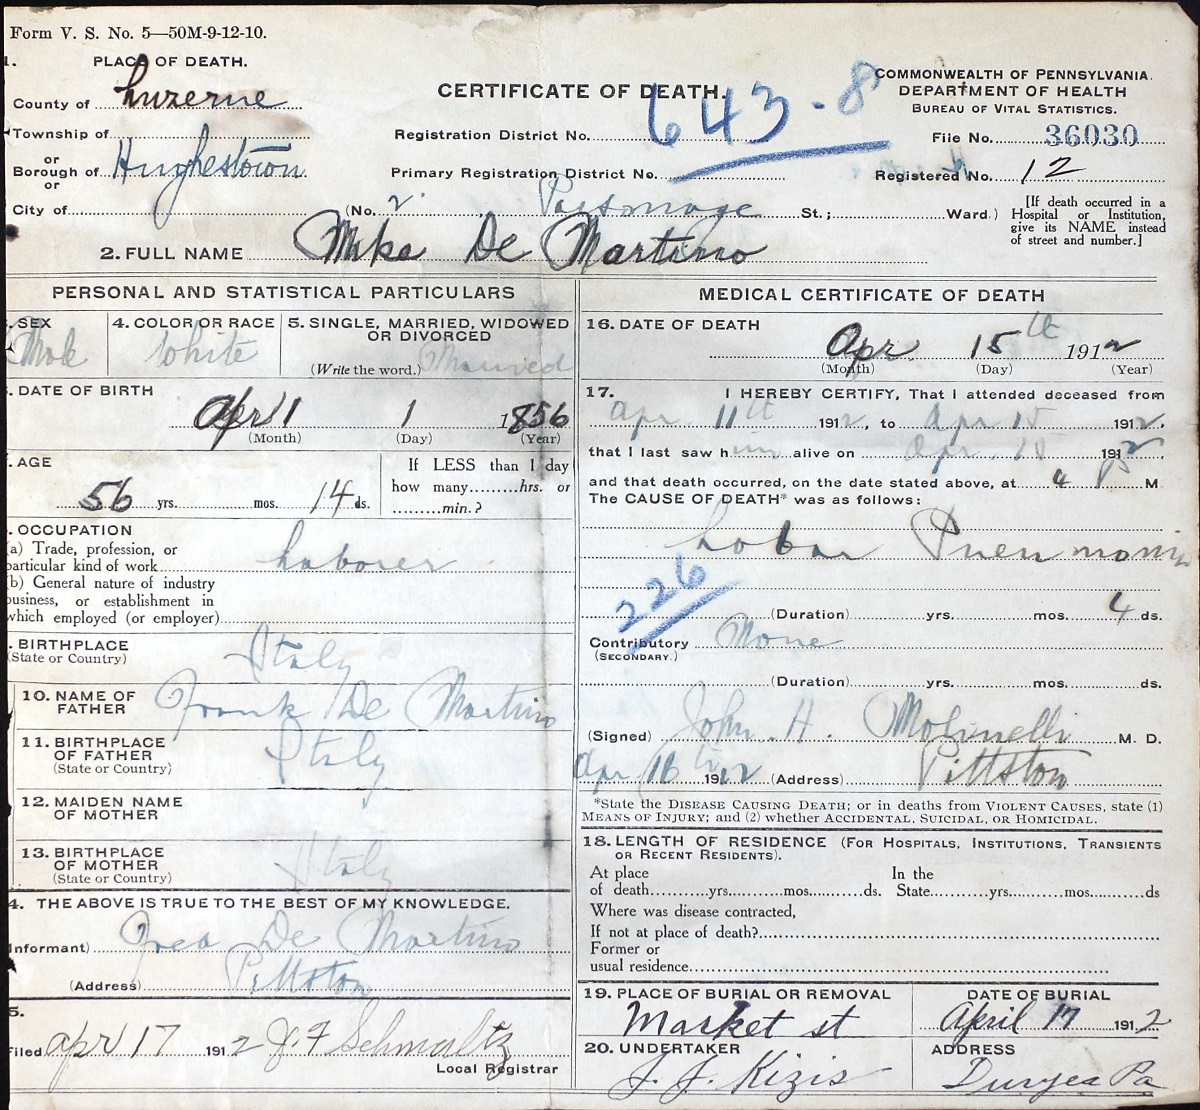 Michele DeMartino Death Certificate